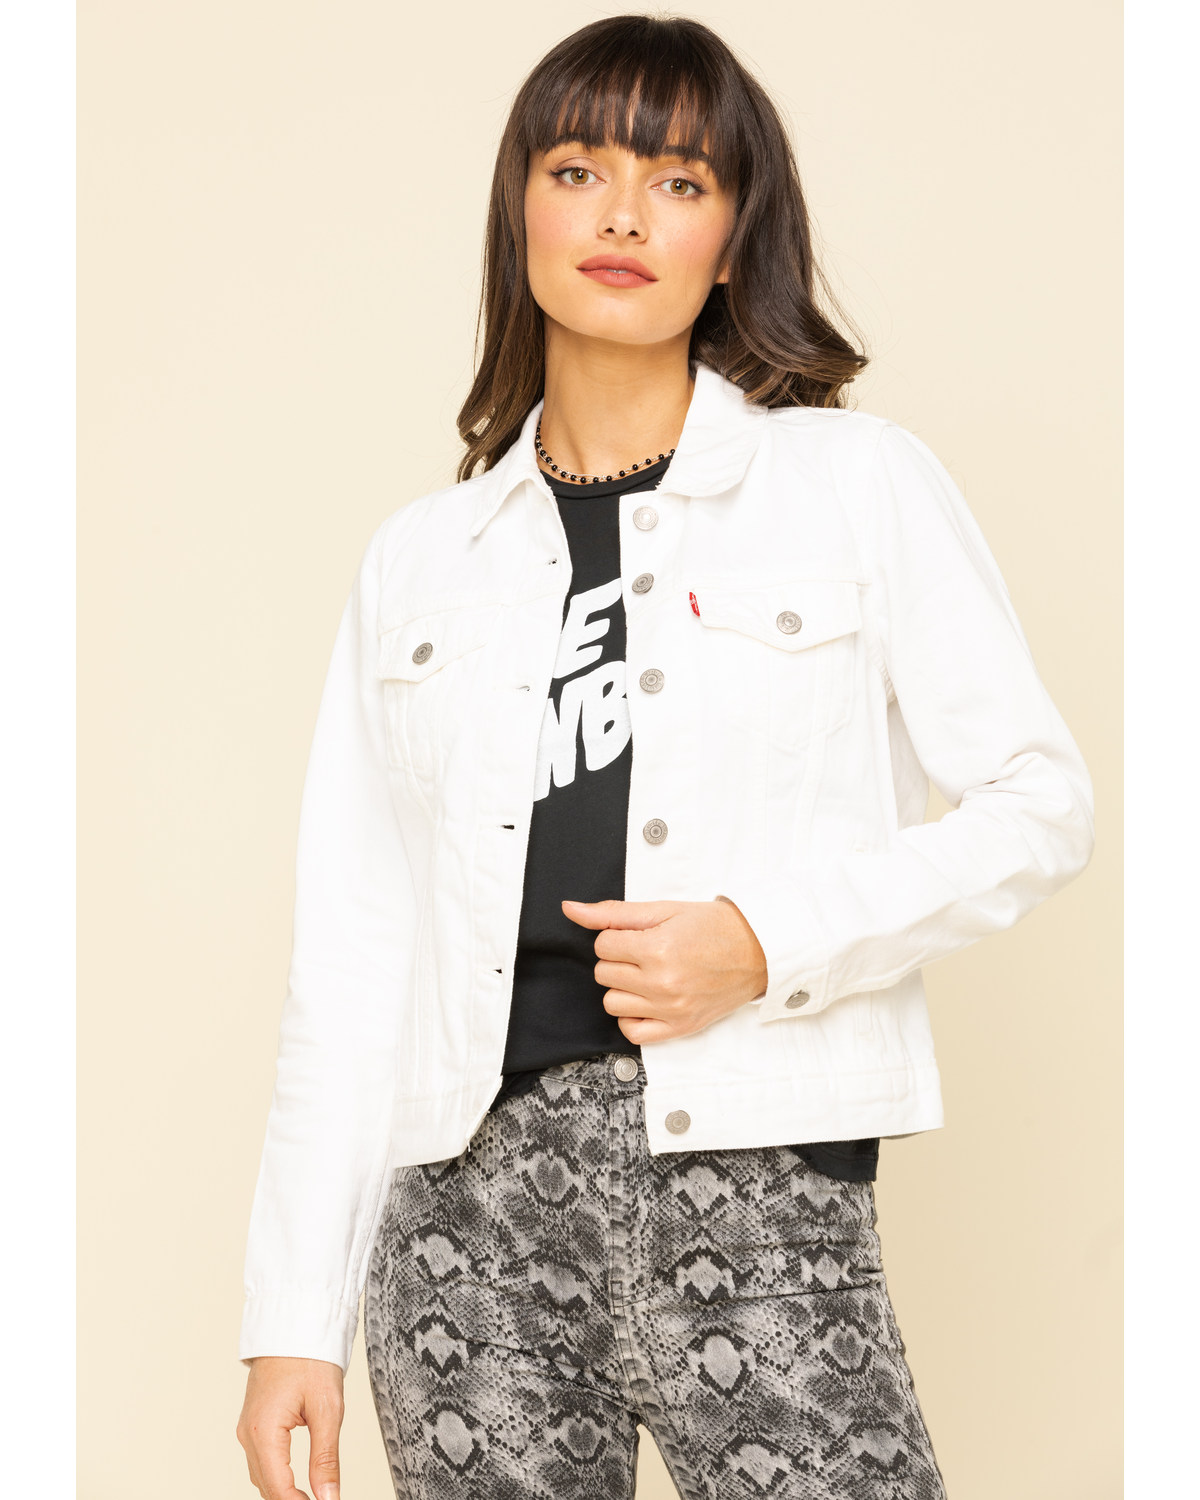 women's levi's white denim jacket